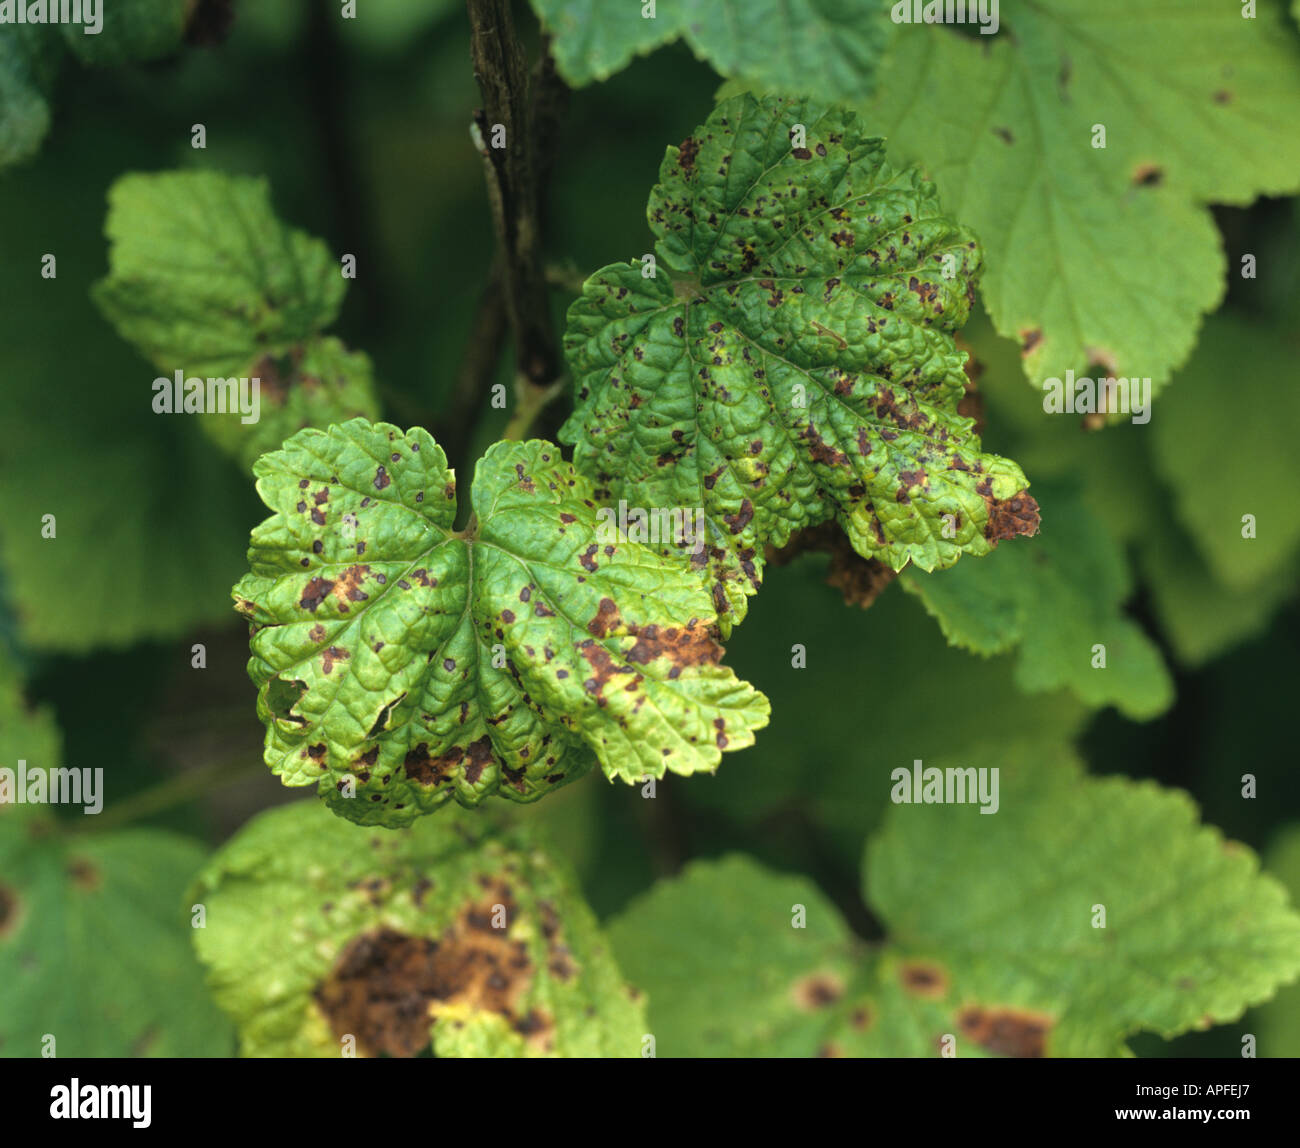 Currant leaf spot Drepanopeziza ribis discreet spotting on blackcurrant leaves Stock Photo